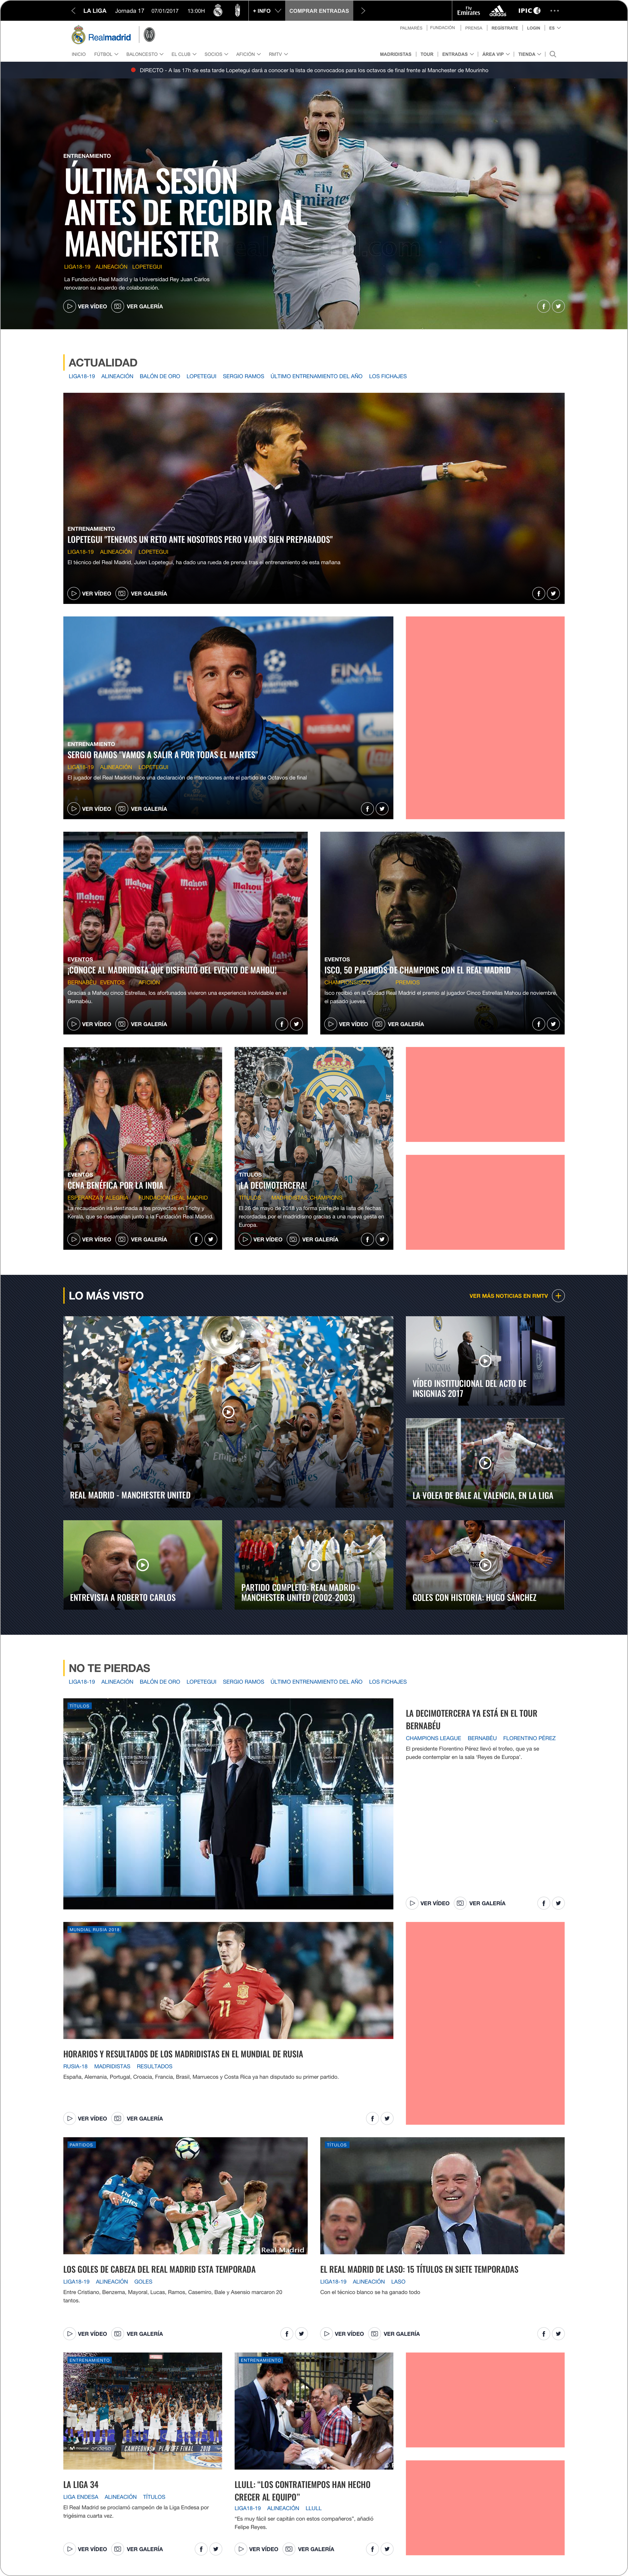 Real Madrid - website